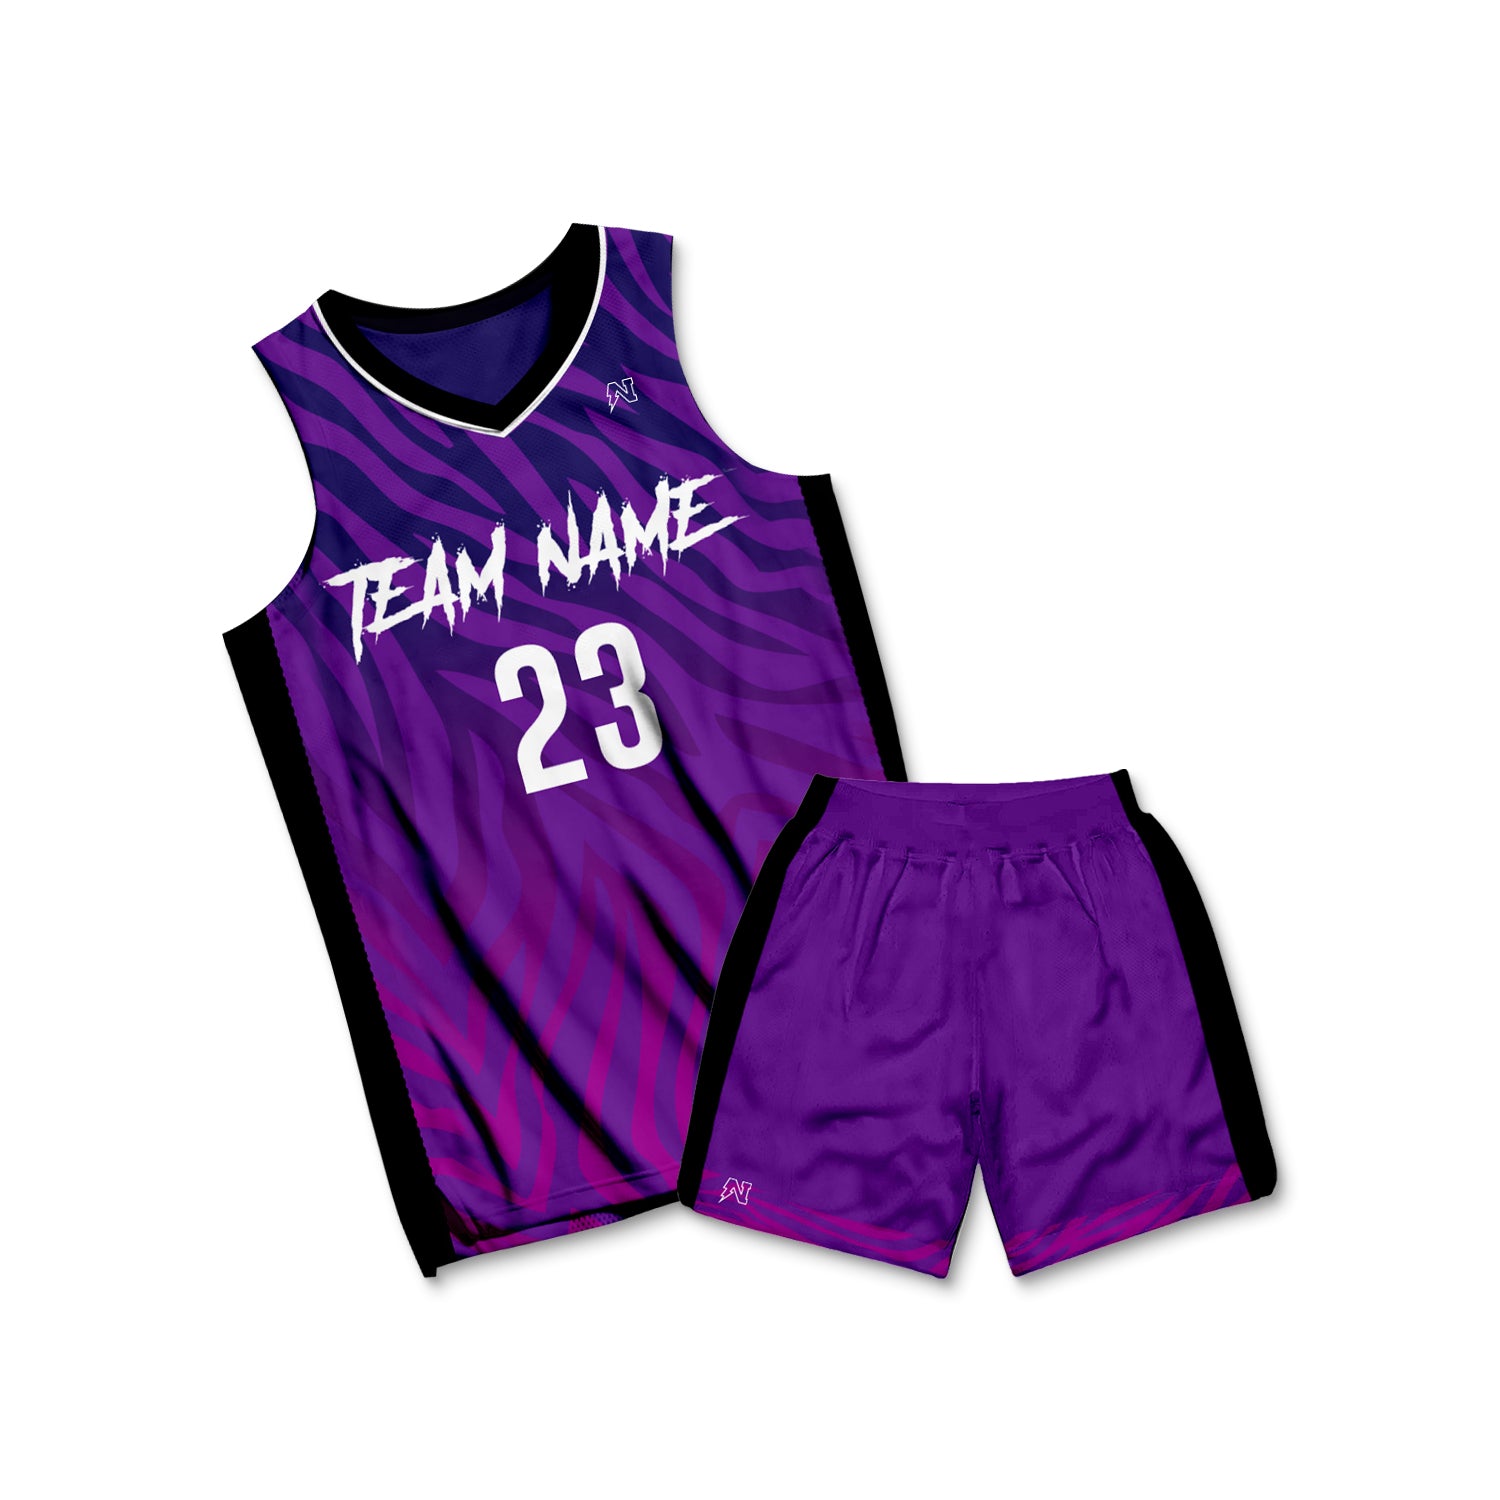 pink and purple basketball jersey